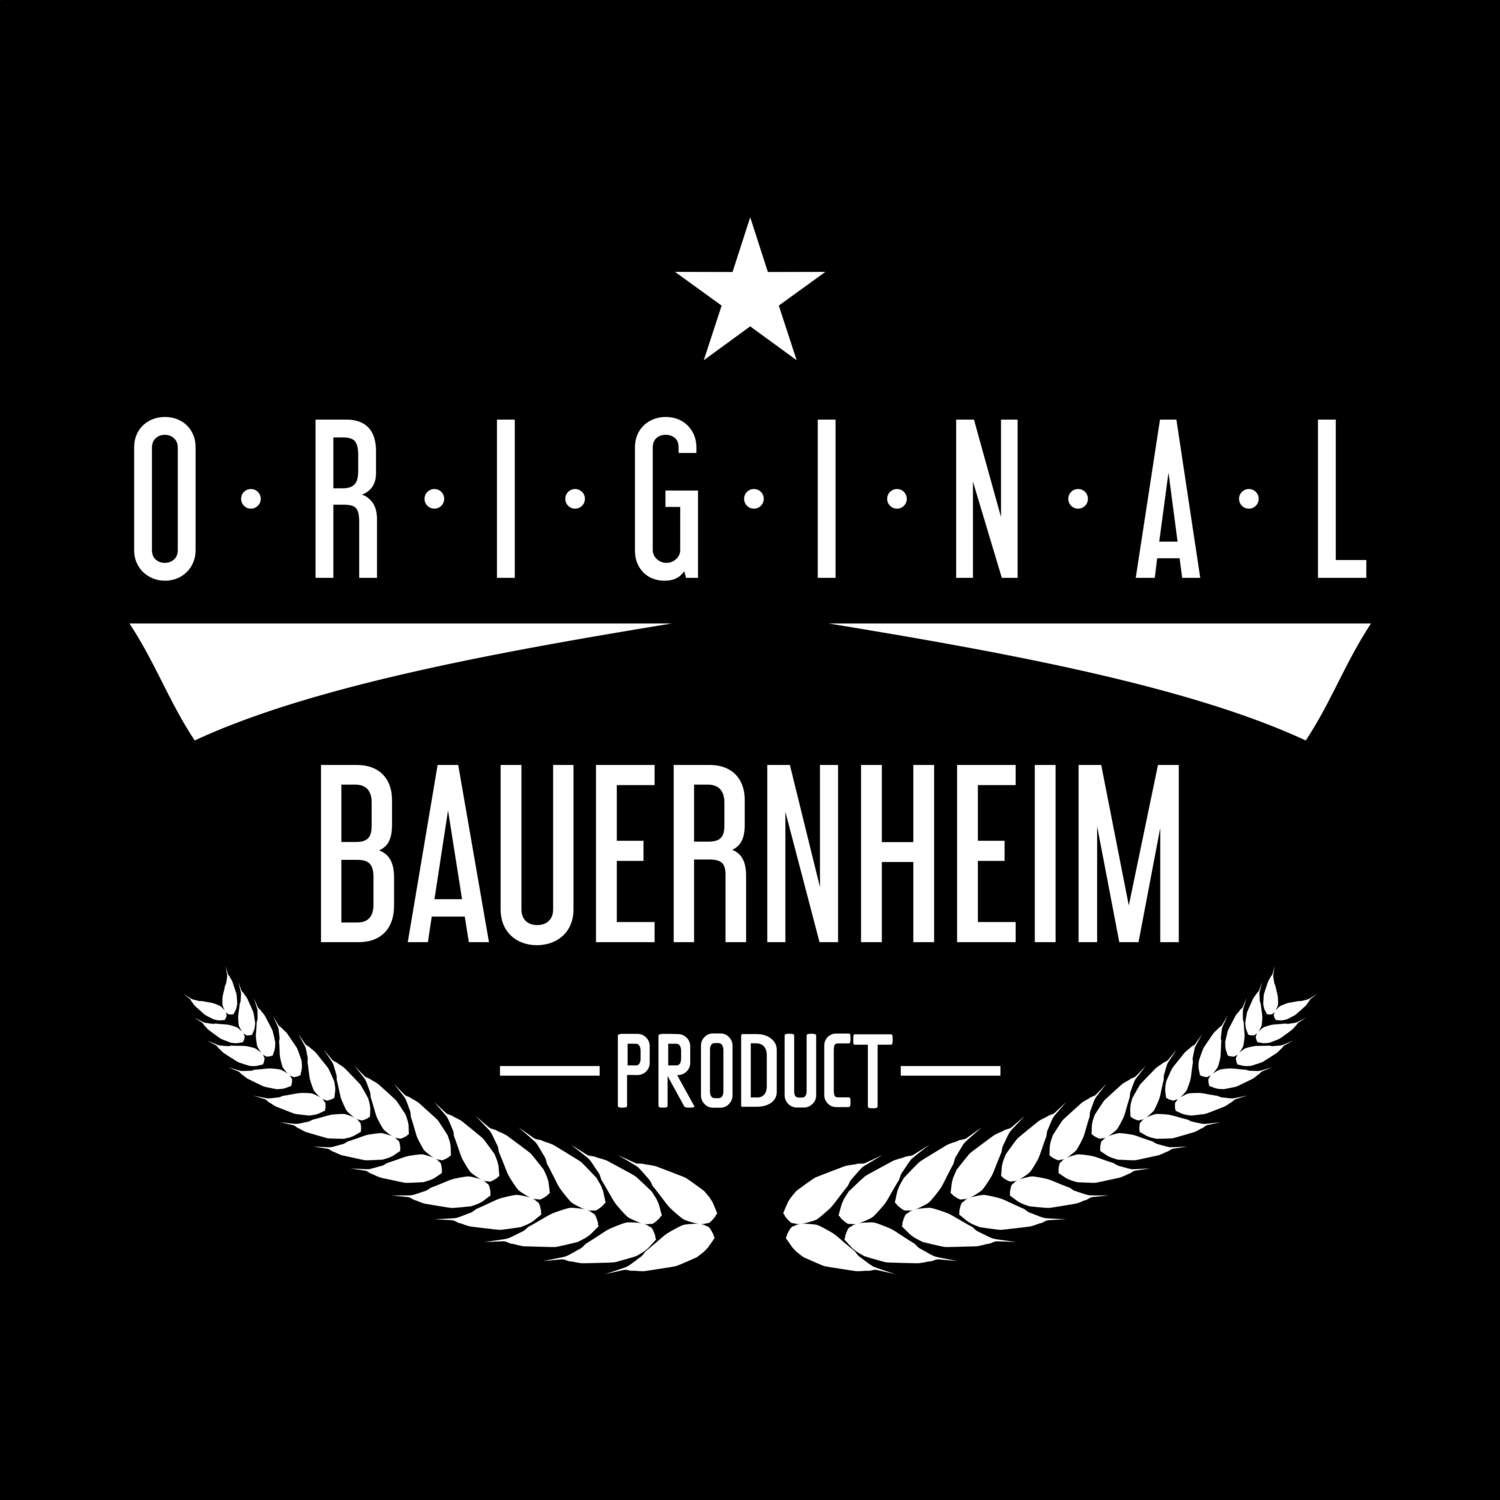 Bauernheim T-Shirt »Original Product«